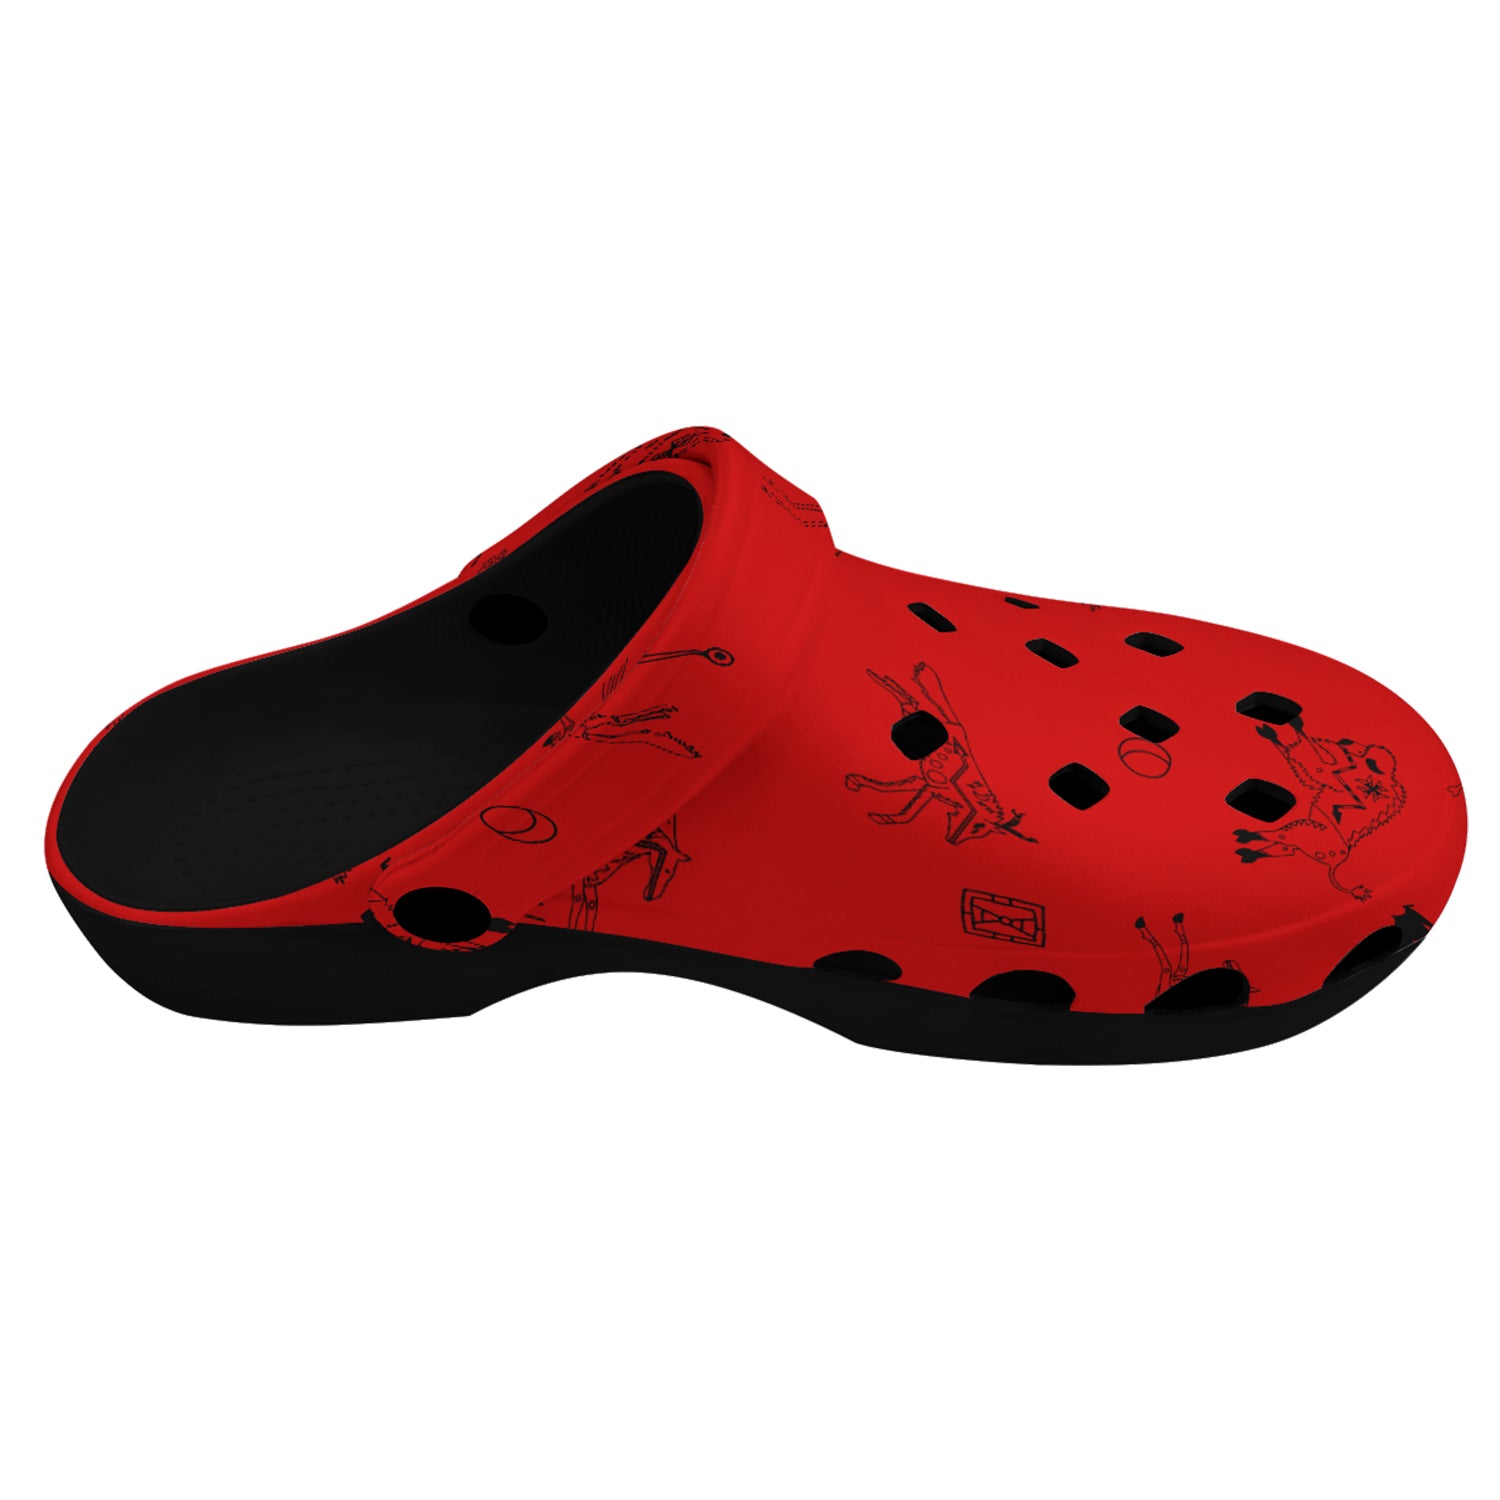 Ledger Dabbles Red Muddies Unisex Clog Shoes